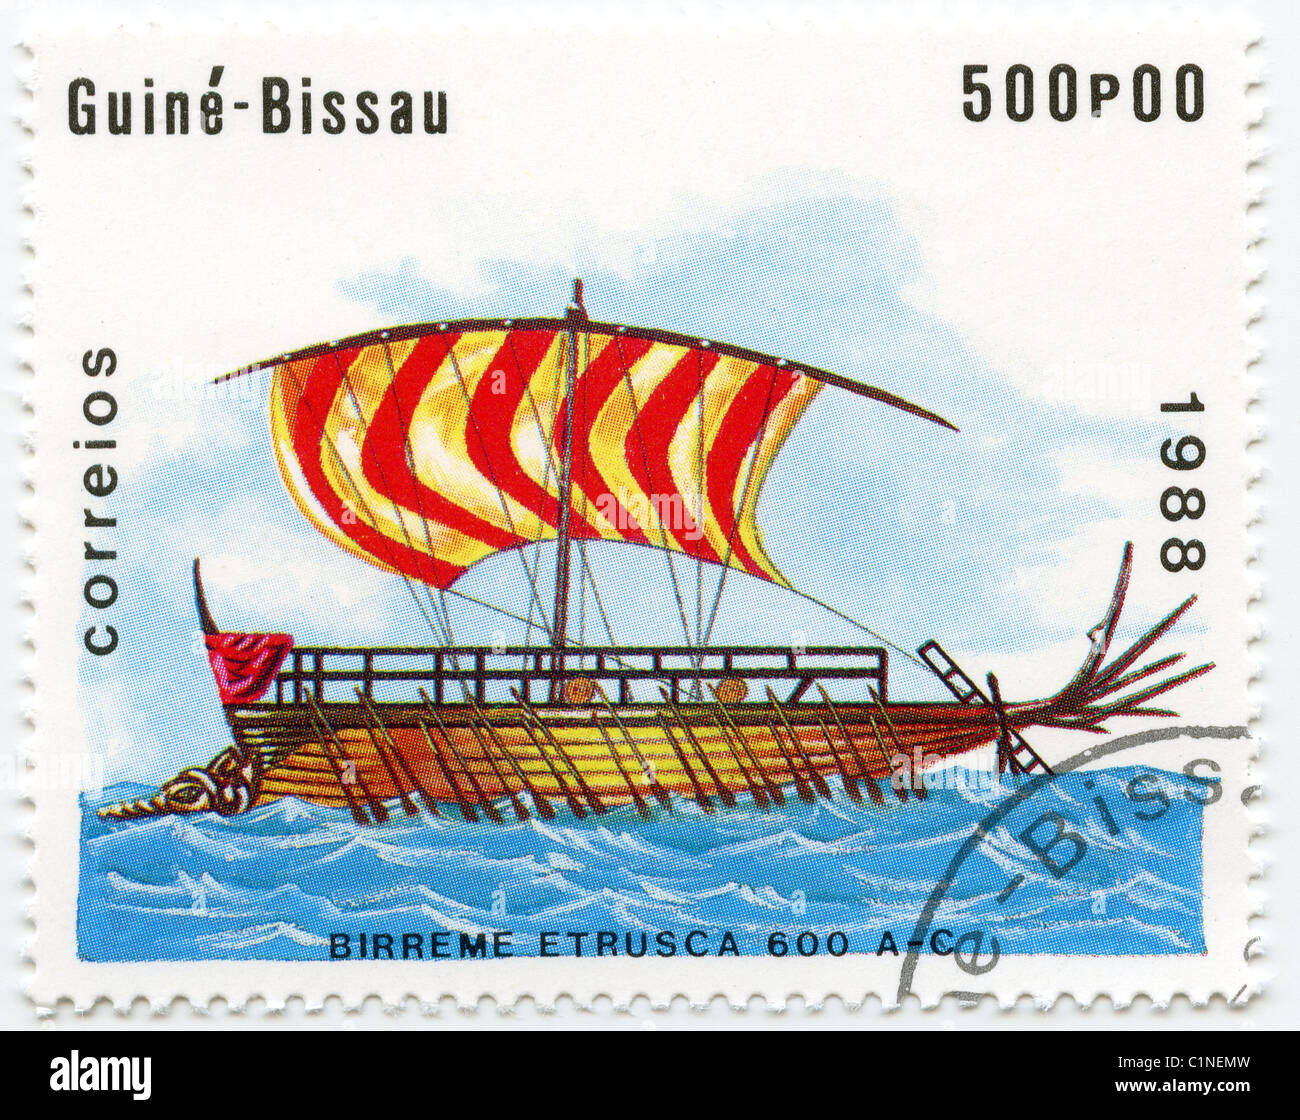 Guine-Bissau postage stamp Stock Photo